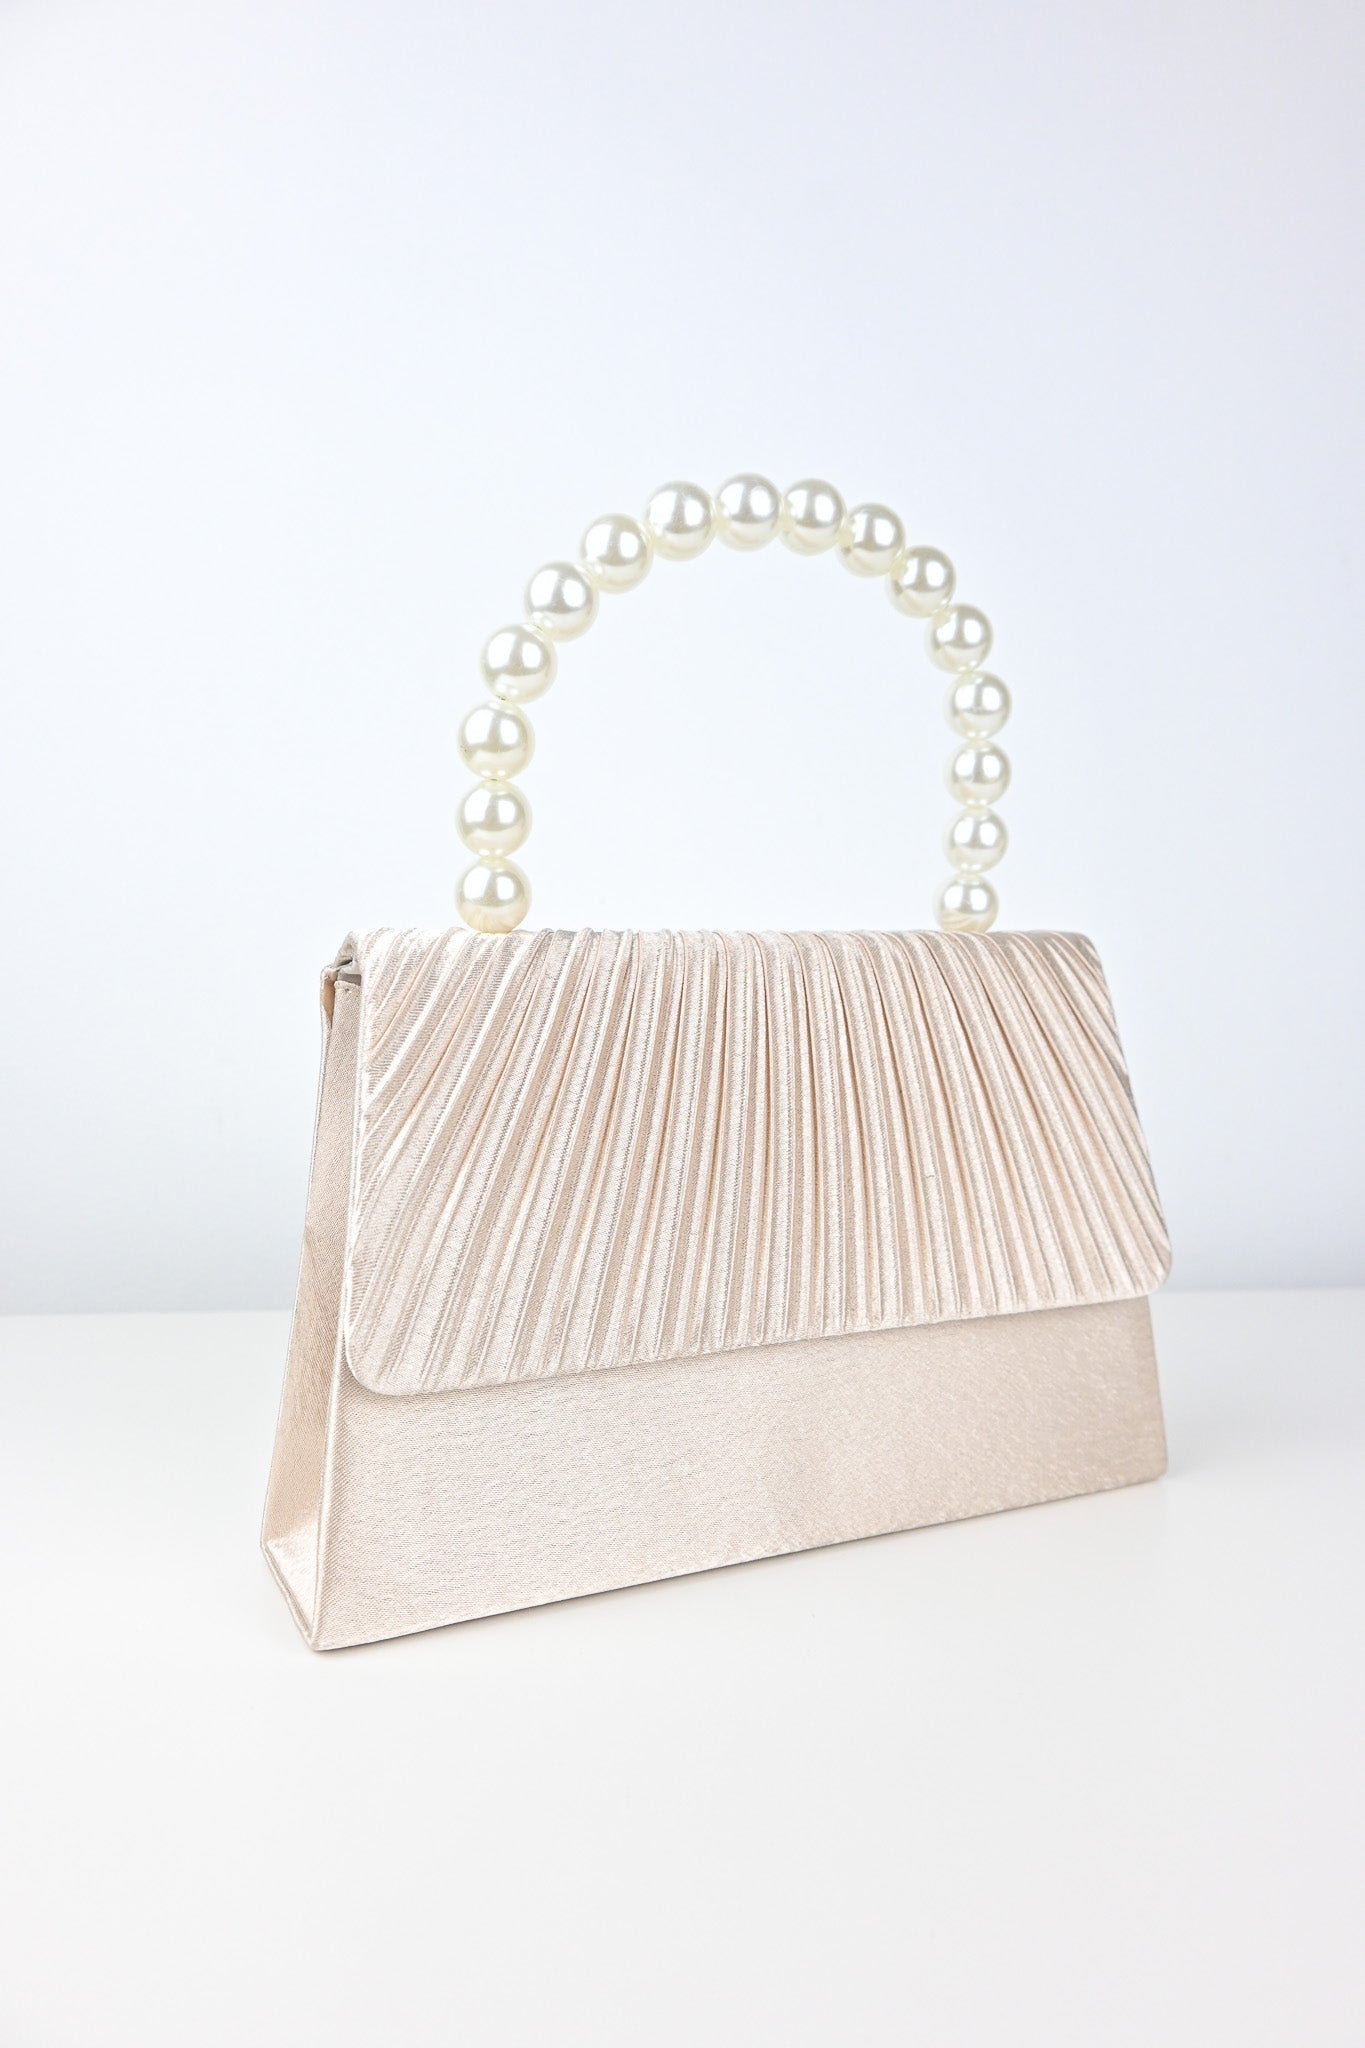 Pearl evening bag, Bridal clutch, Pearl purse, wedding accessories 